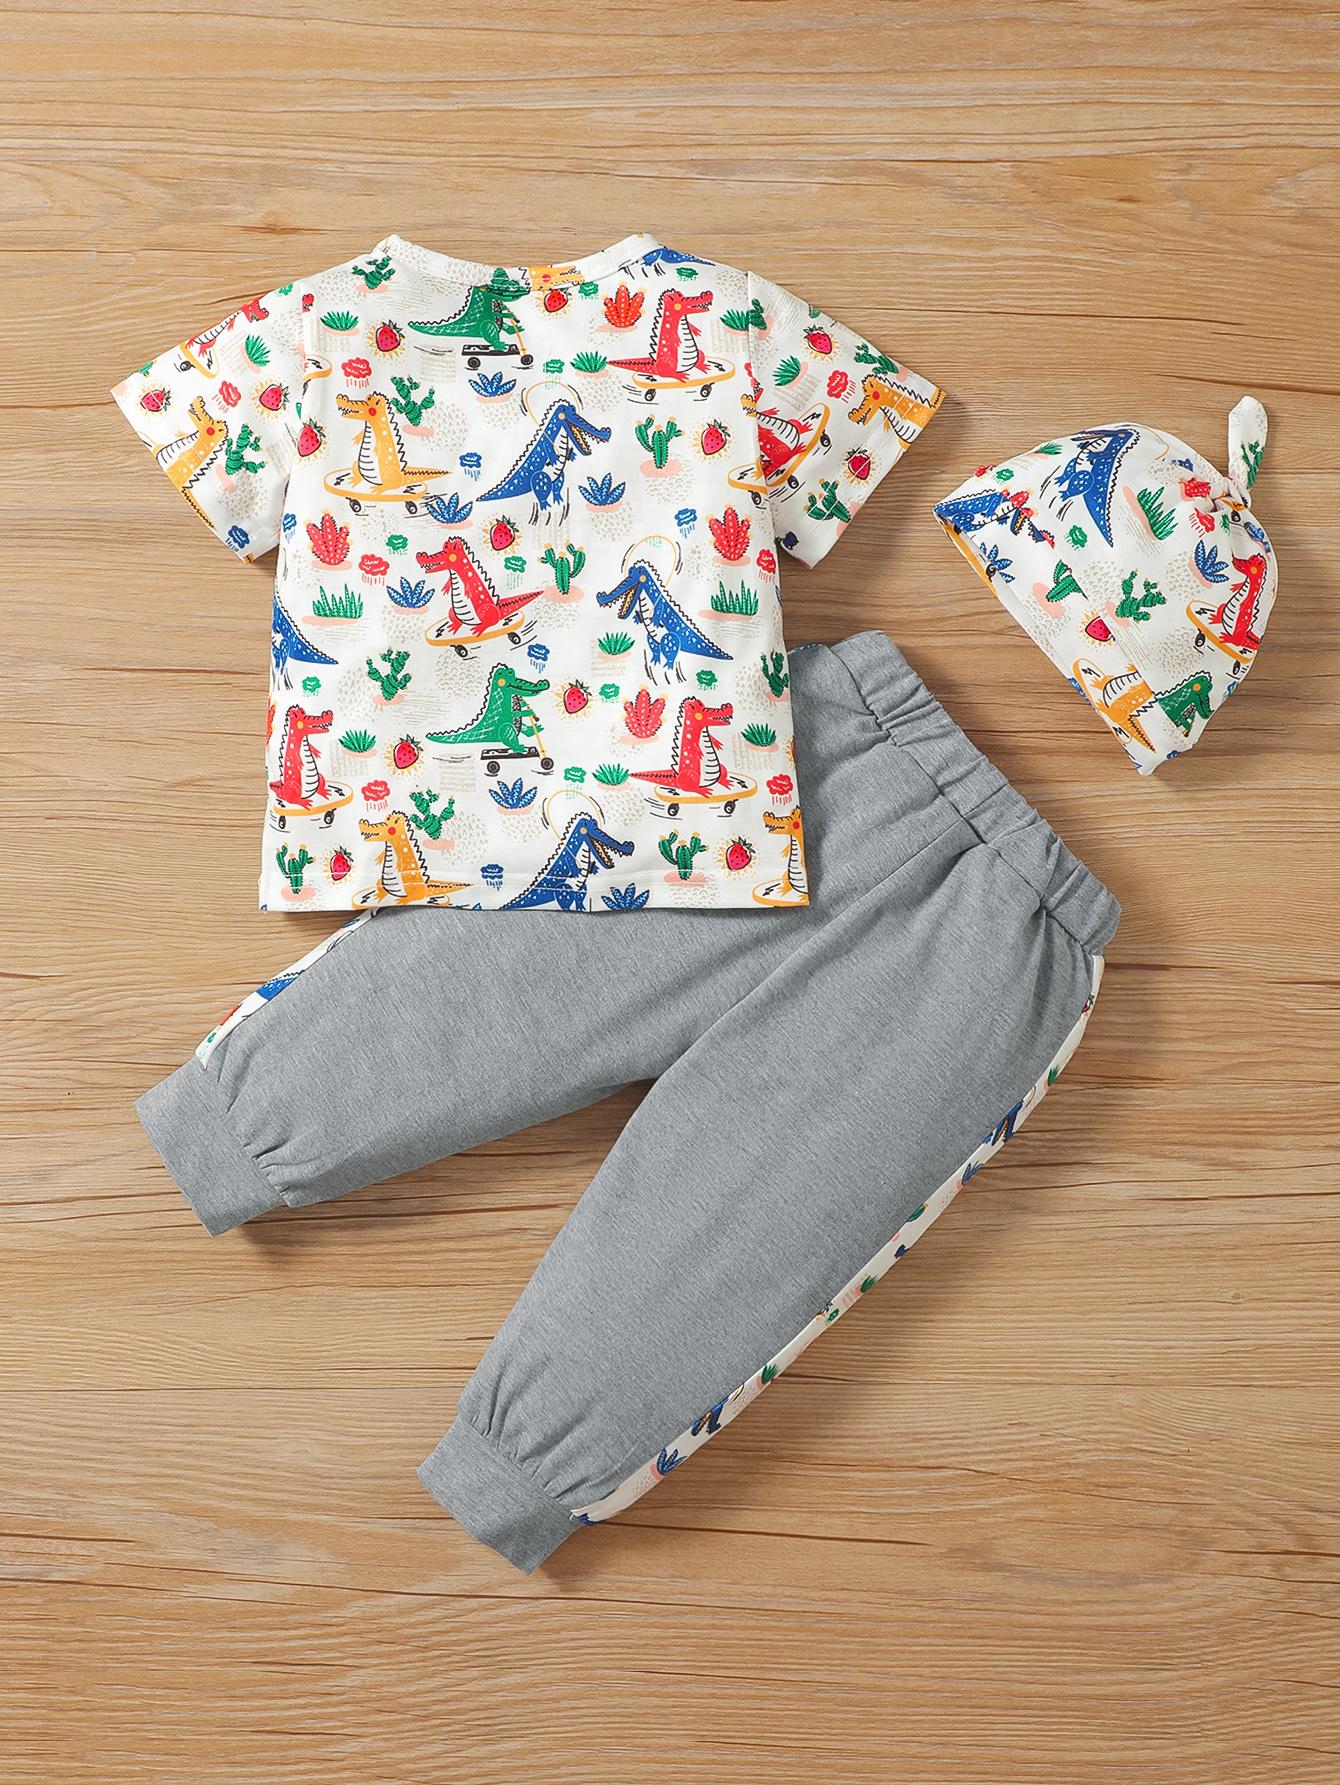 6M-3Y Kid Fashion Ready Stock Baby Boys Clothes OOTD Dinosaur Short Sleeve Elastic Pants Hat 3Pcs Outfits Gray Catpapa 122205754